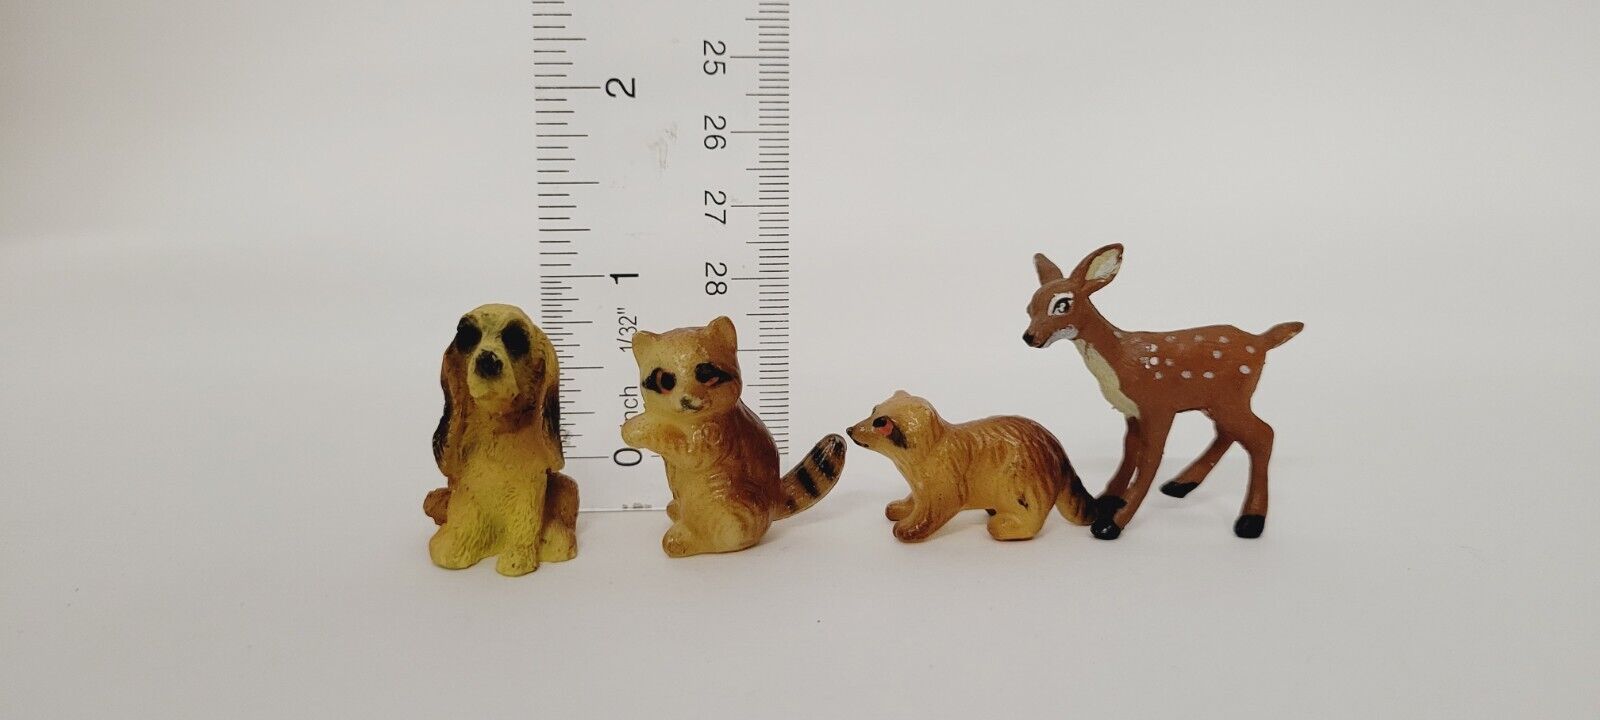 4 Tiny Vintage Miniature Animal Figurine Dog, Raccoon, Deer For Craft Dollhouse 